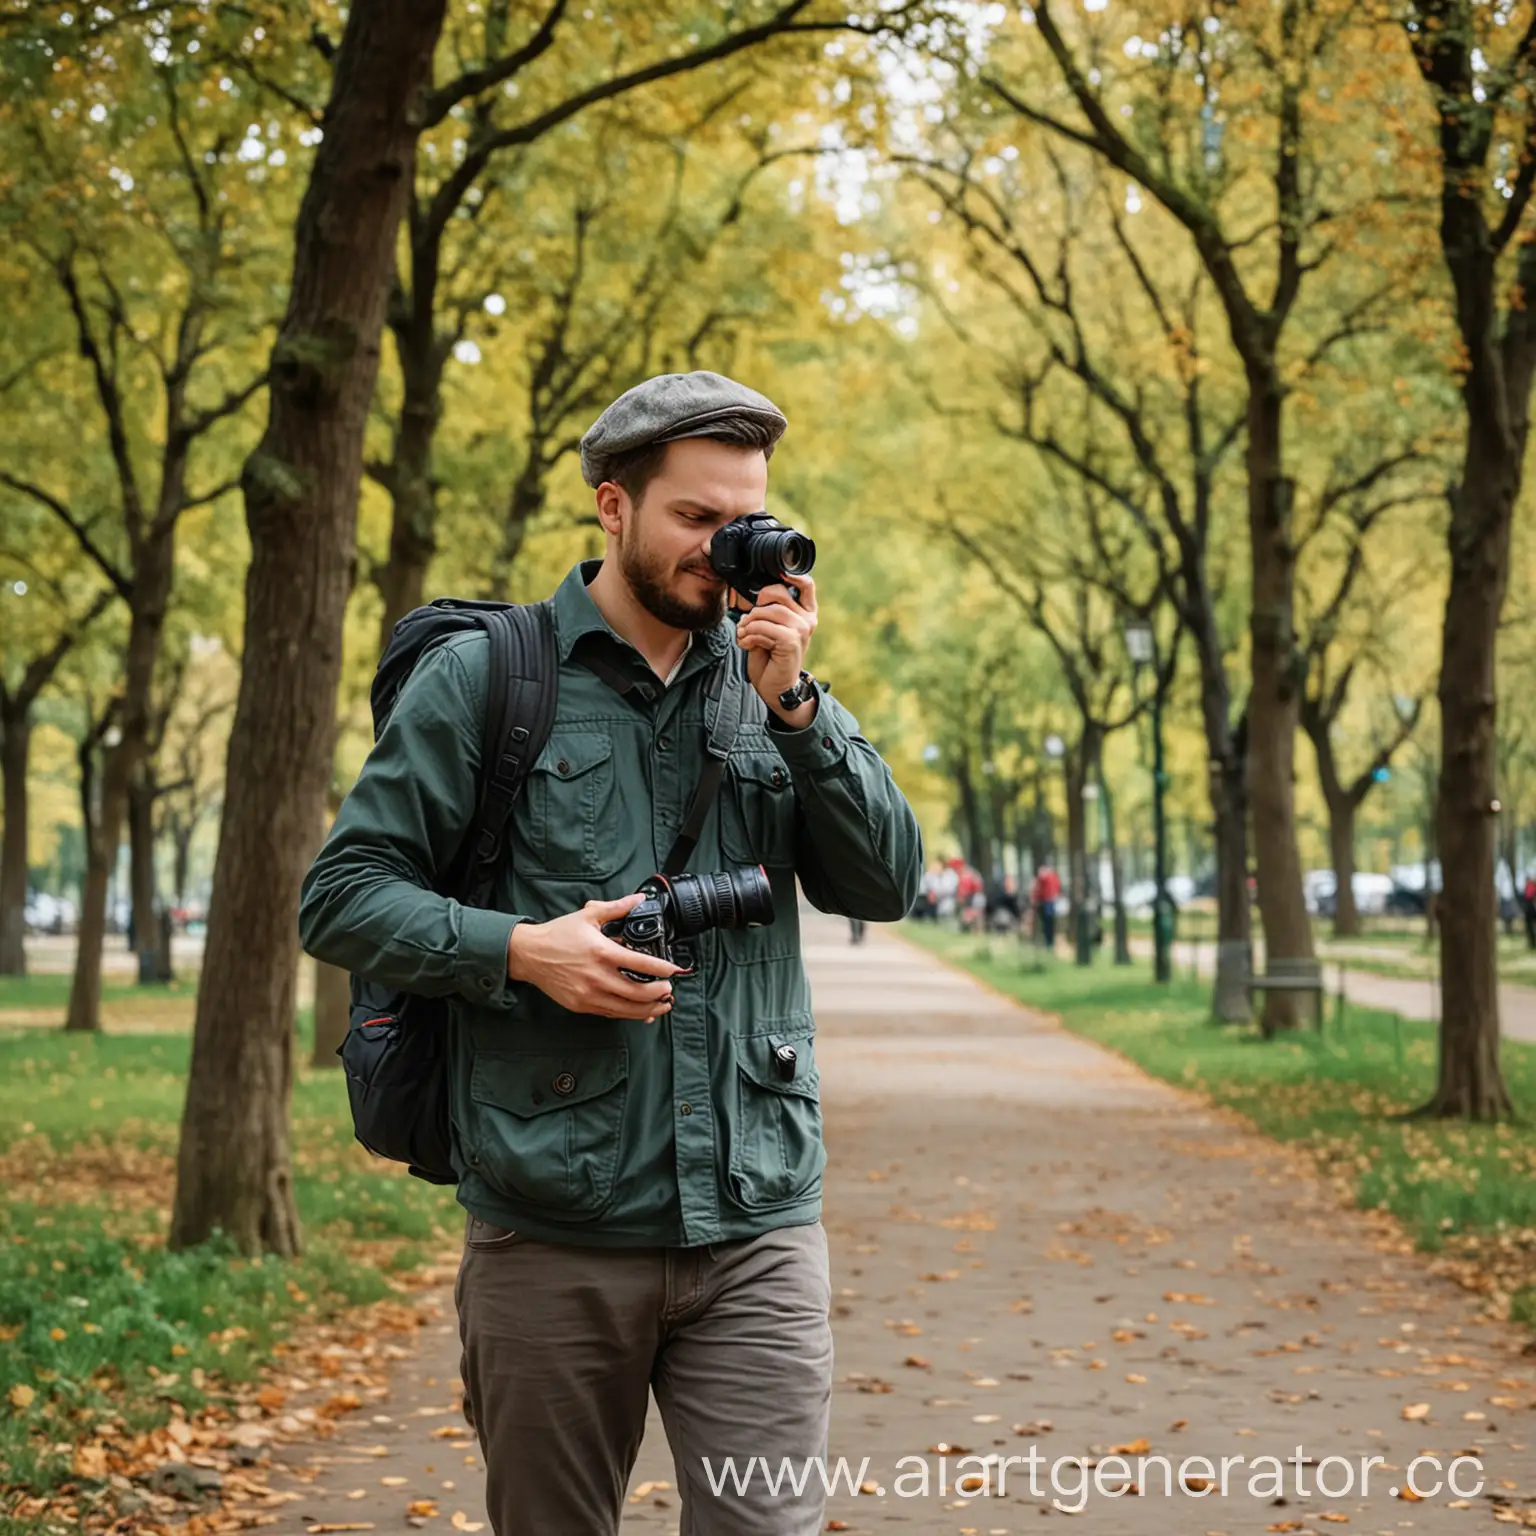 турист фотограф гуляет по парку с фотоаппаратом